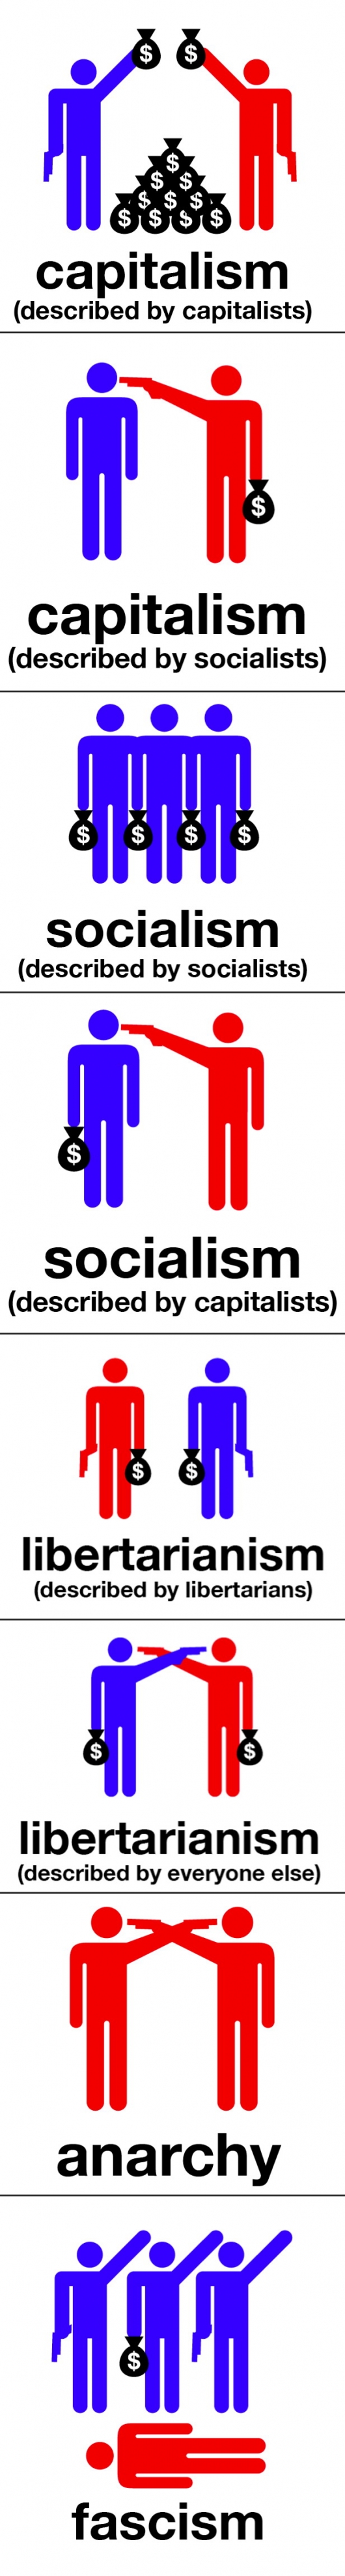 Capitalism, socialism, libertarianism, anarchy and fascism